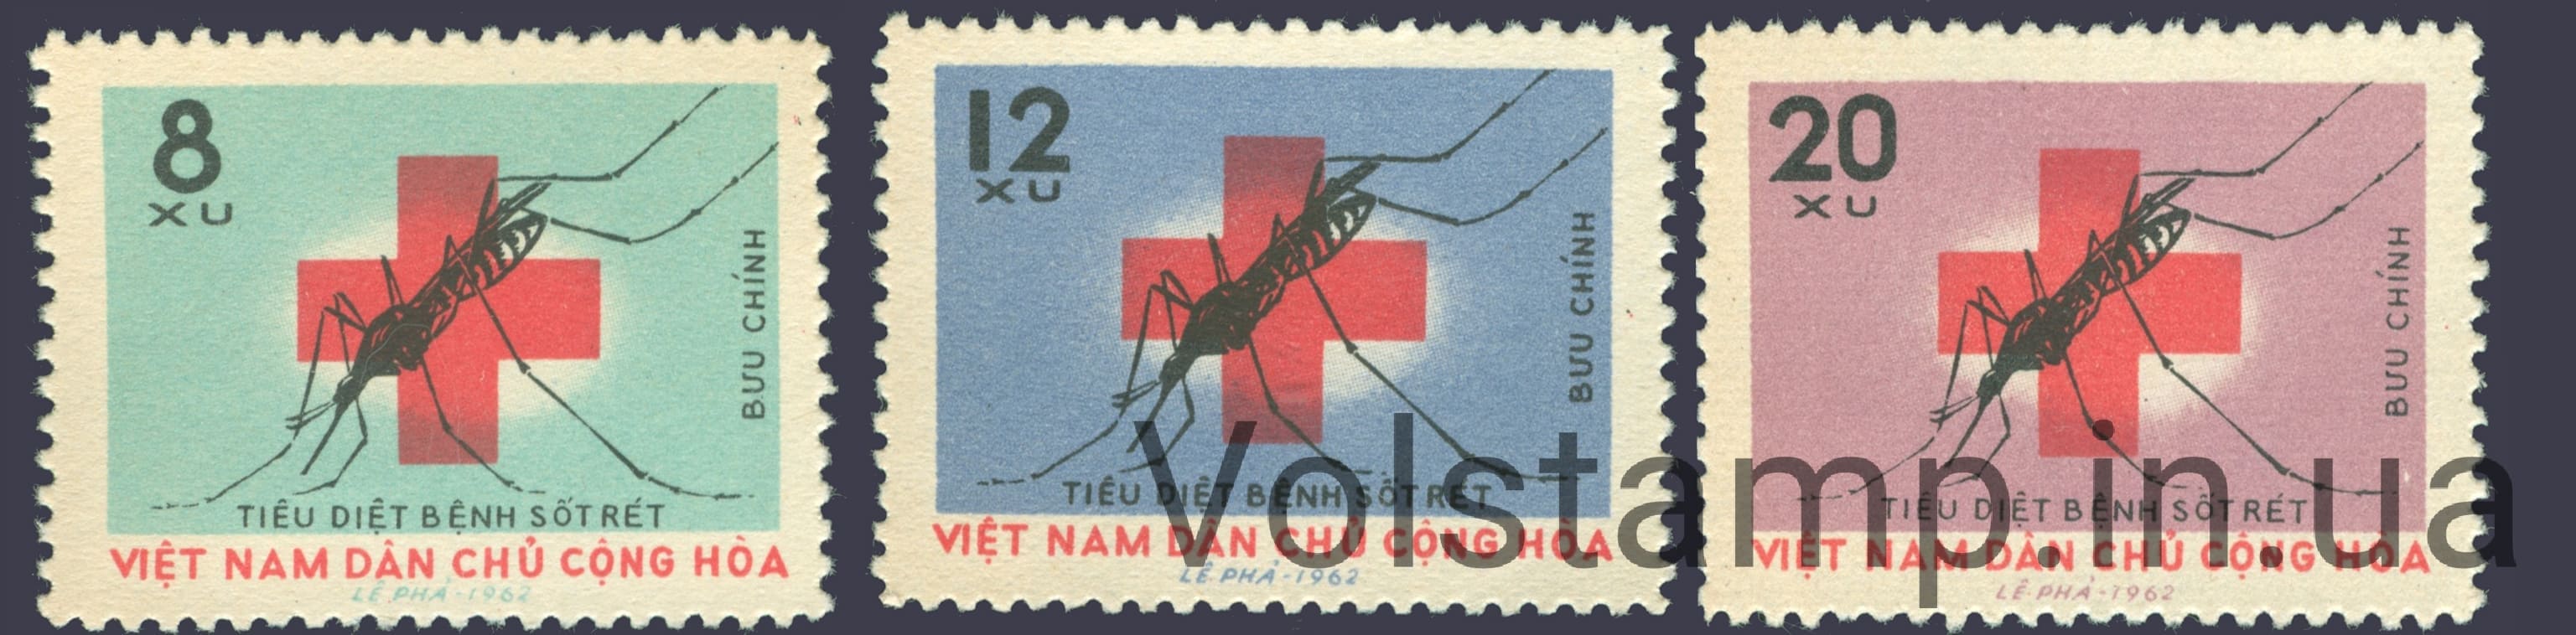 1962 Вьетнам Серия марок (Комары, малярия) MNH №220-222